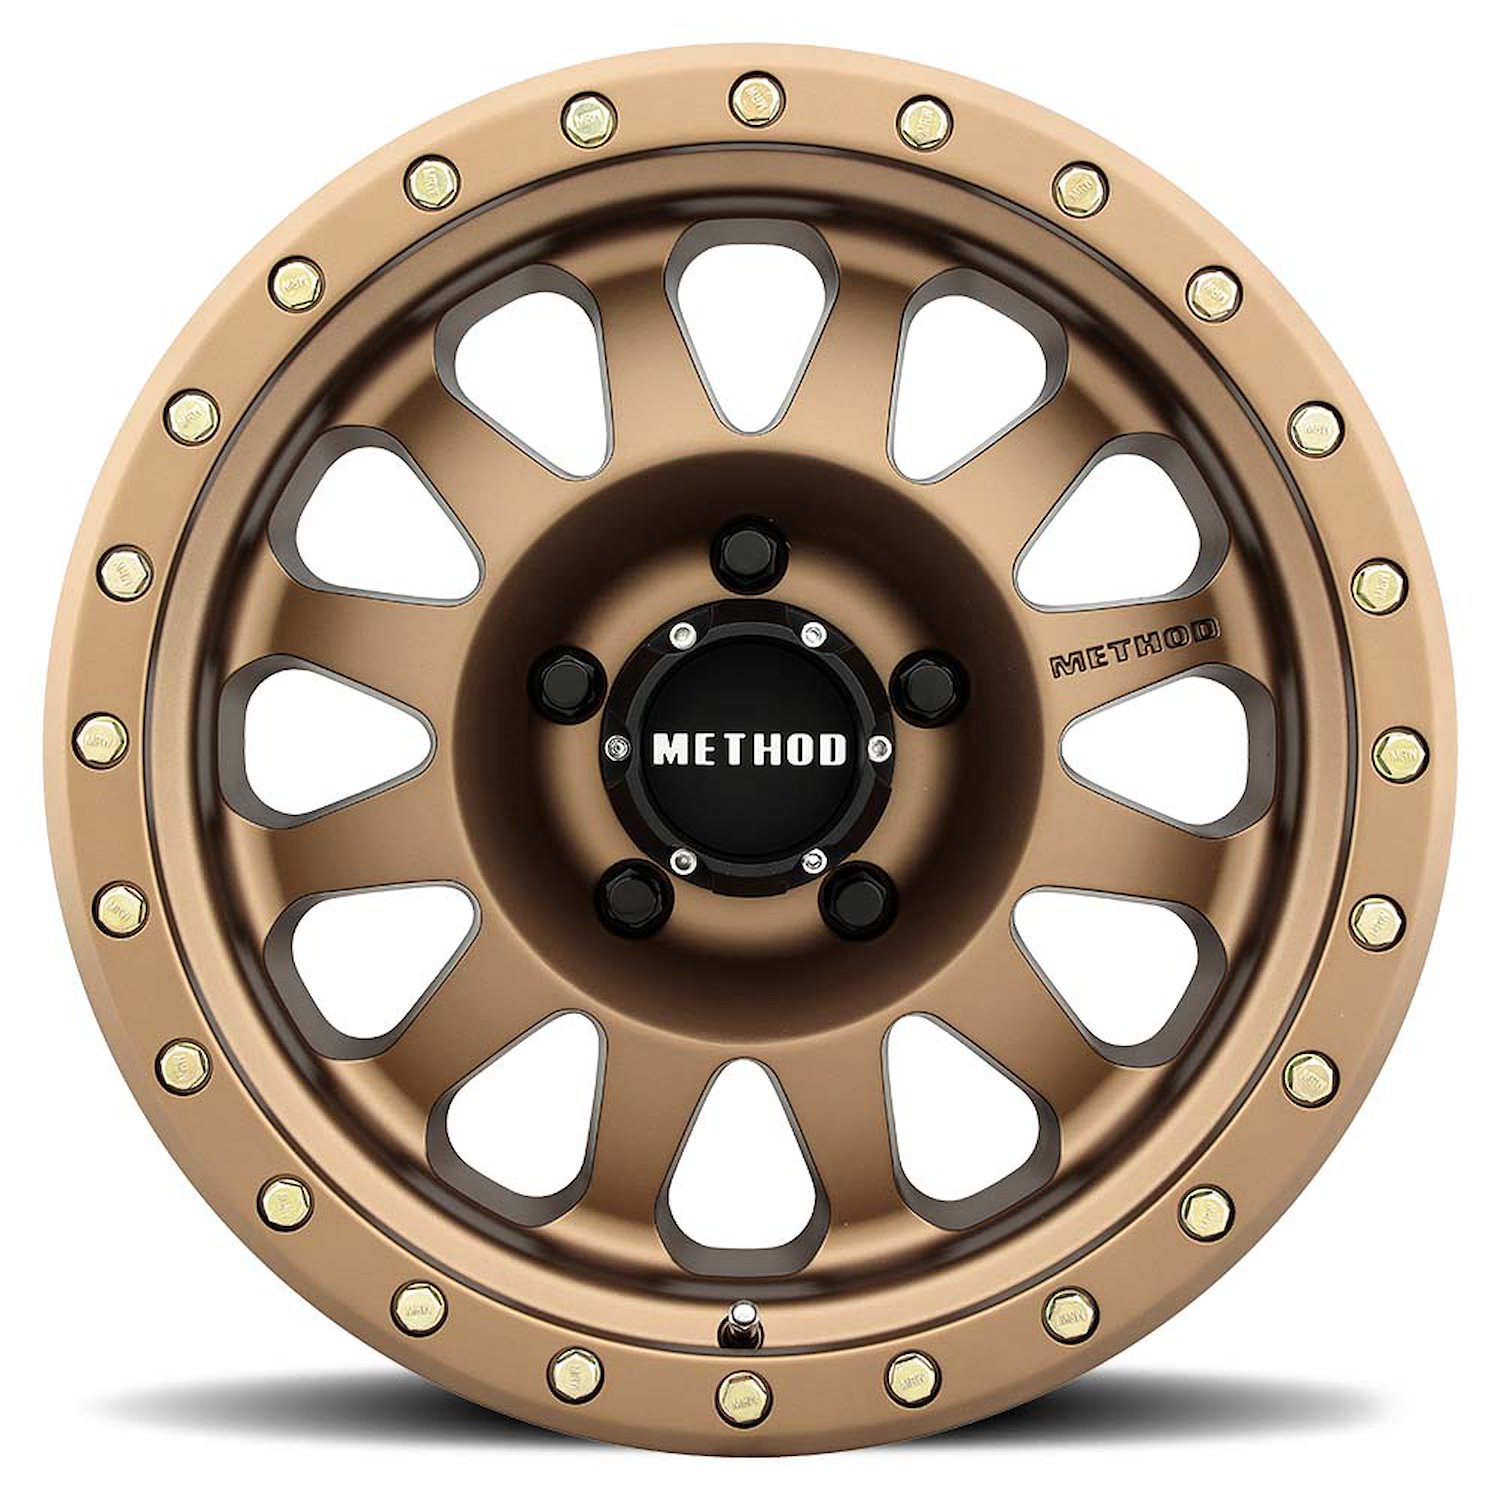 MR30478550900 STREET MR304 Double Standard Wheel [Size: 17" x 8.5"] Method Bronze